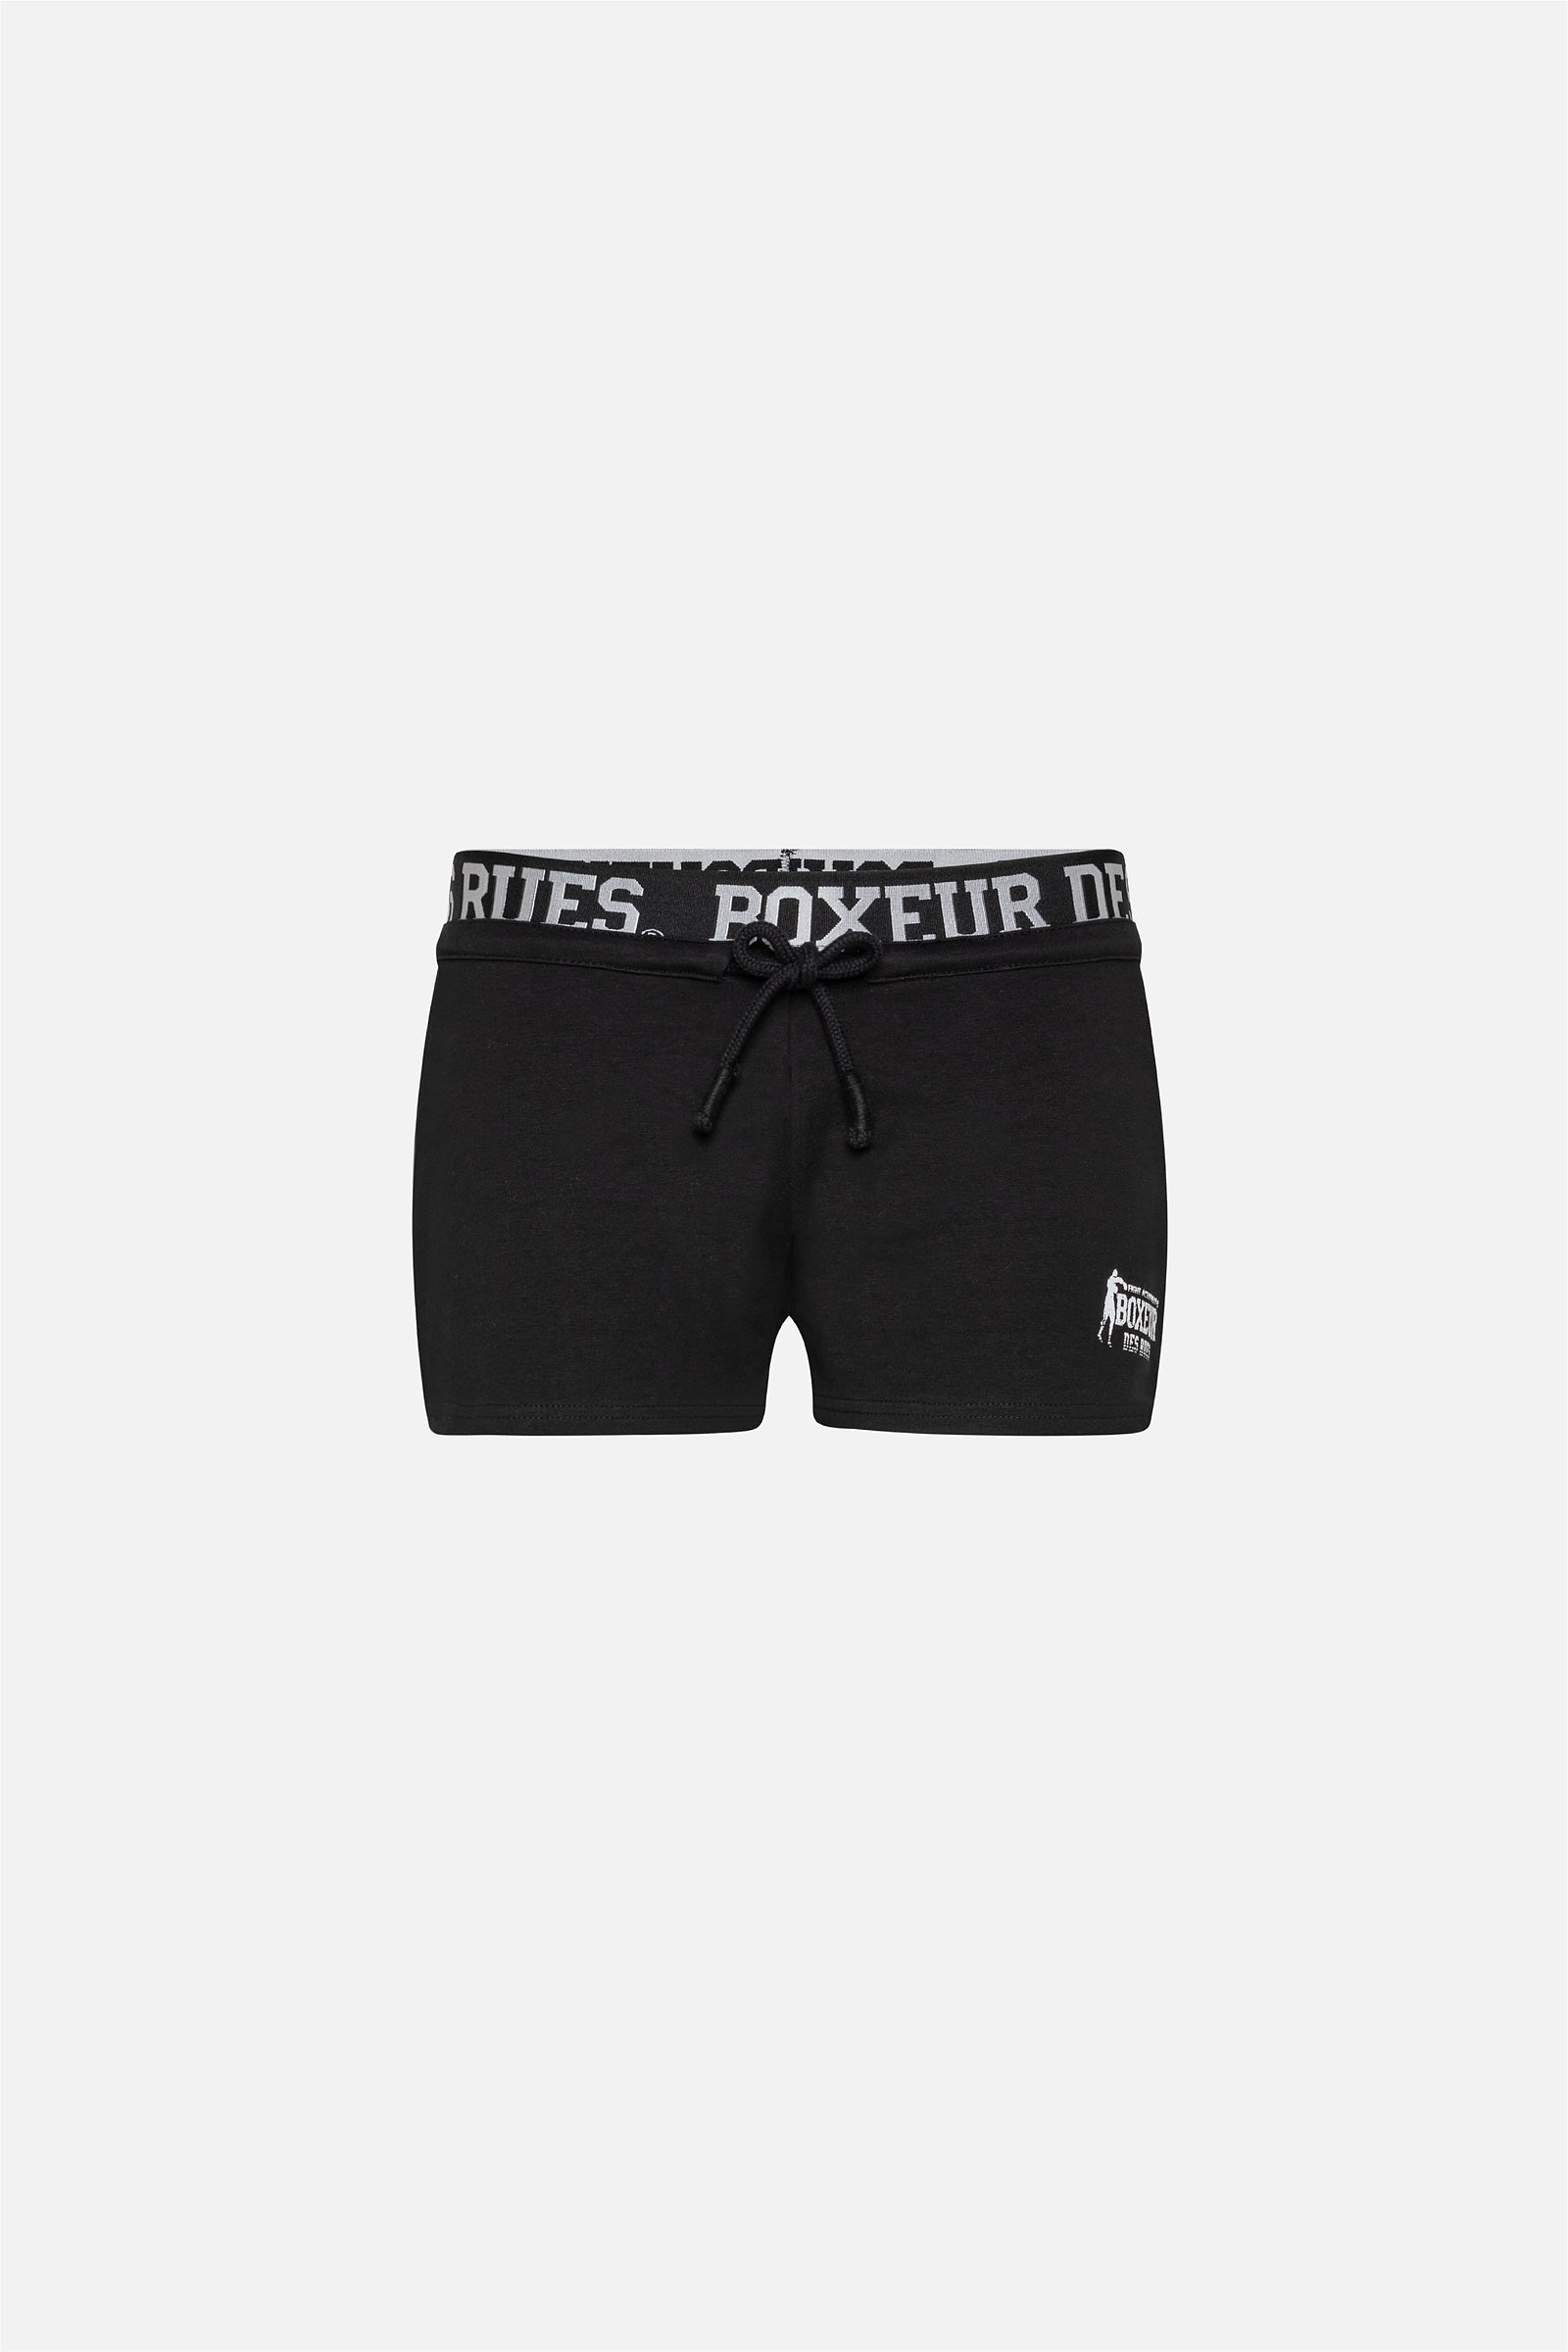 Curved Hem Essential Shorts in Black Sweatshorts Boxeur des Rues   